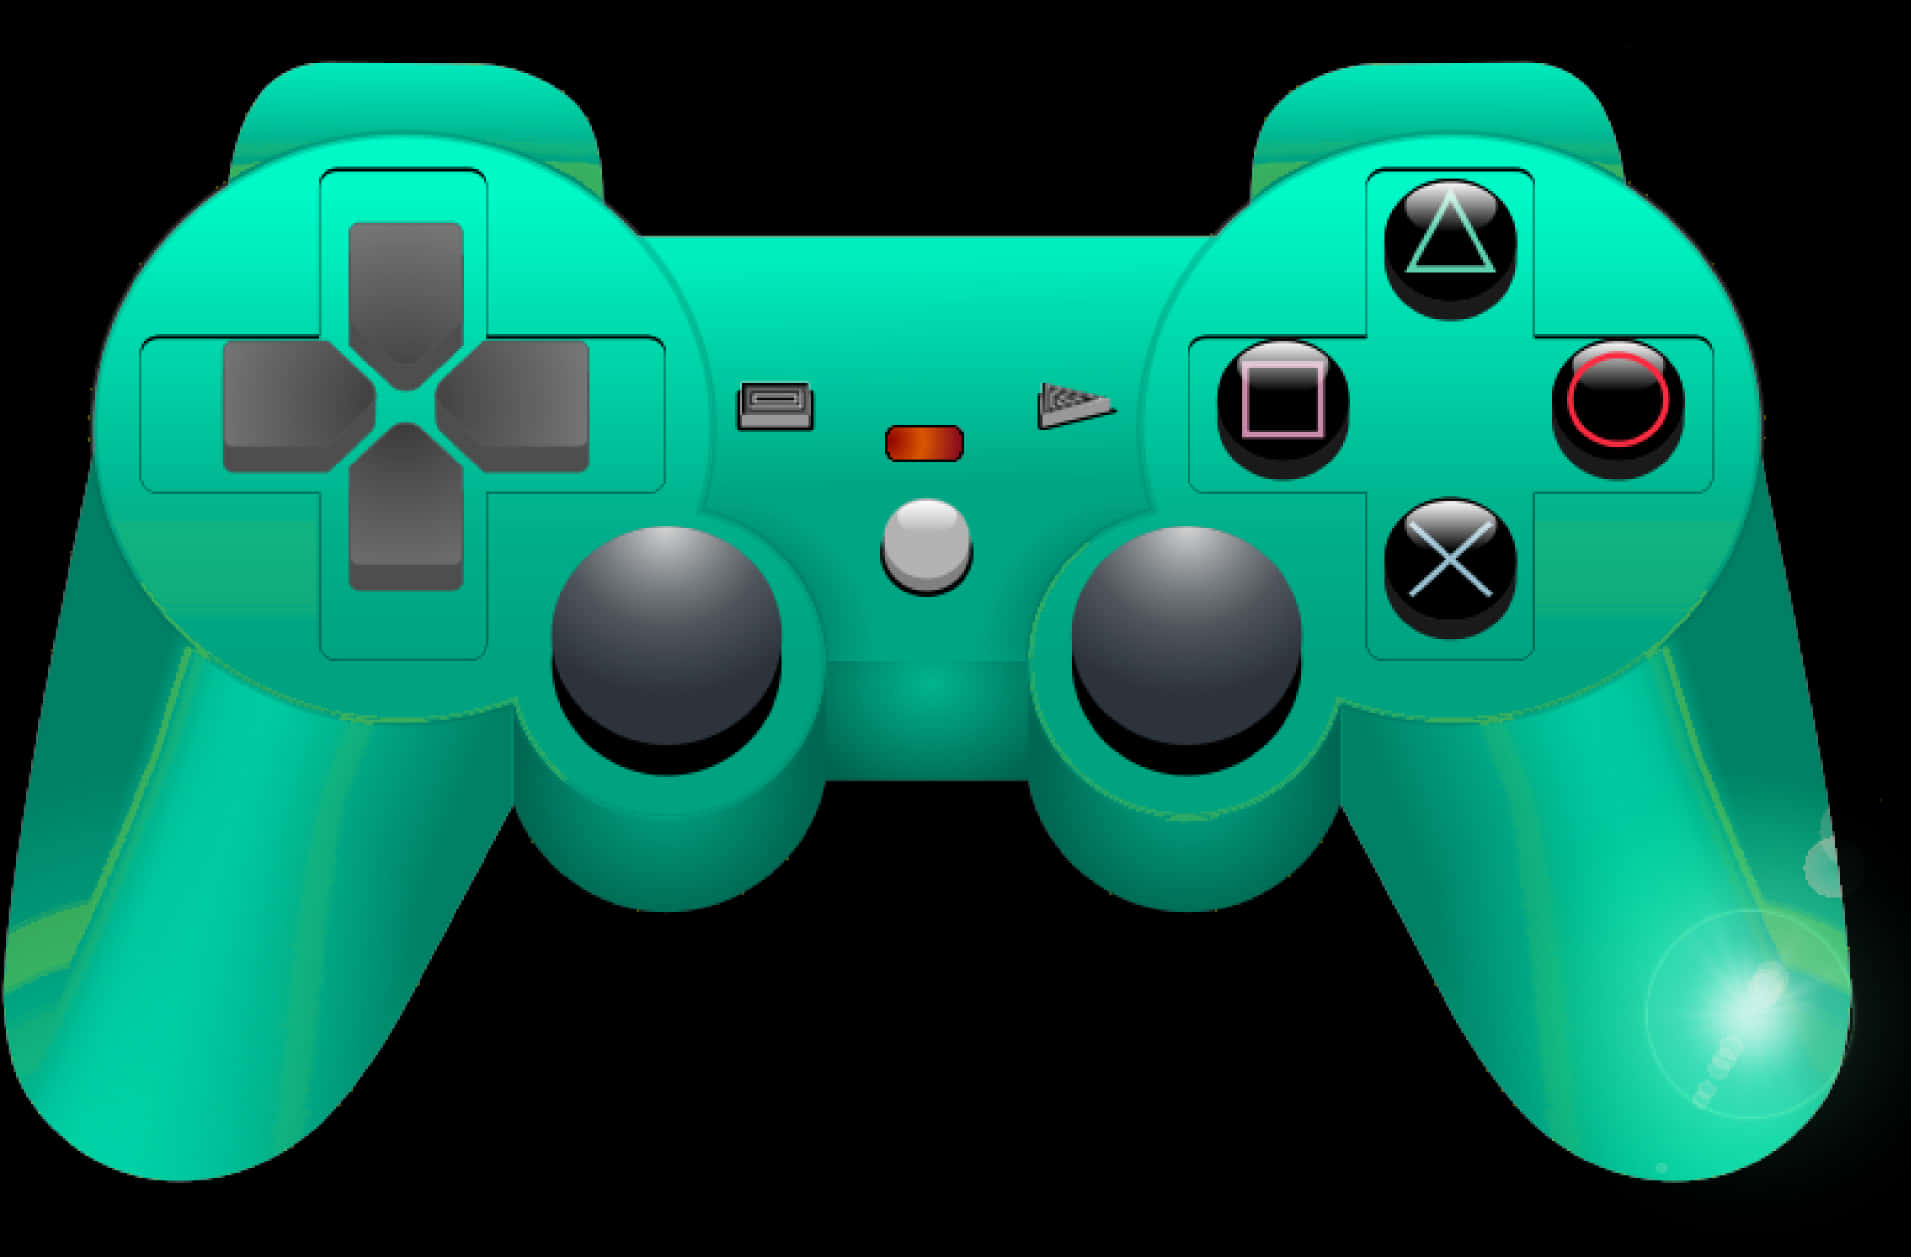 A Green Video Game Controller